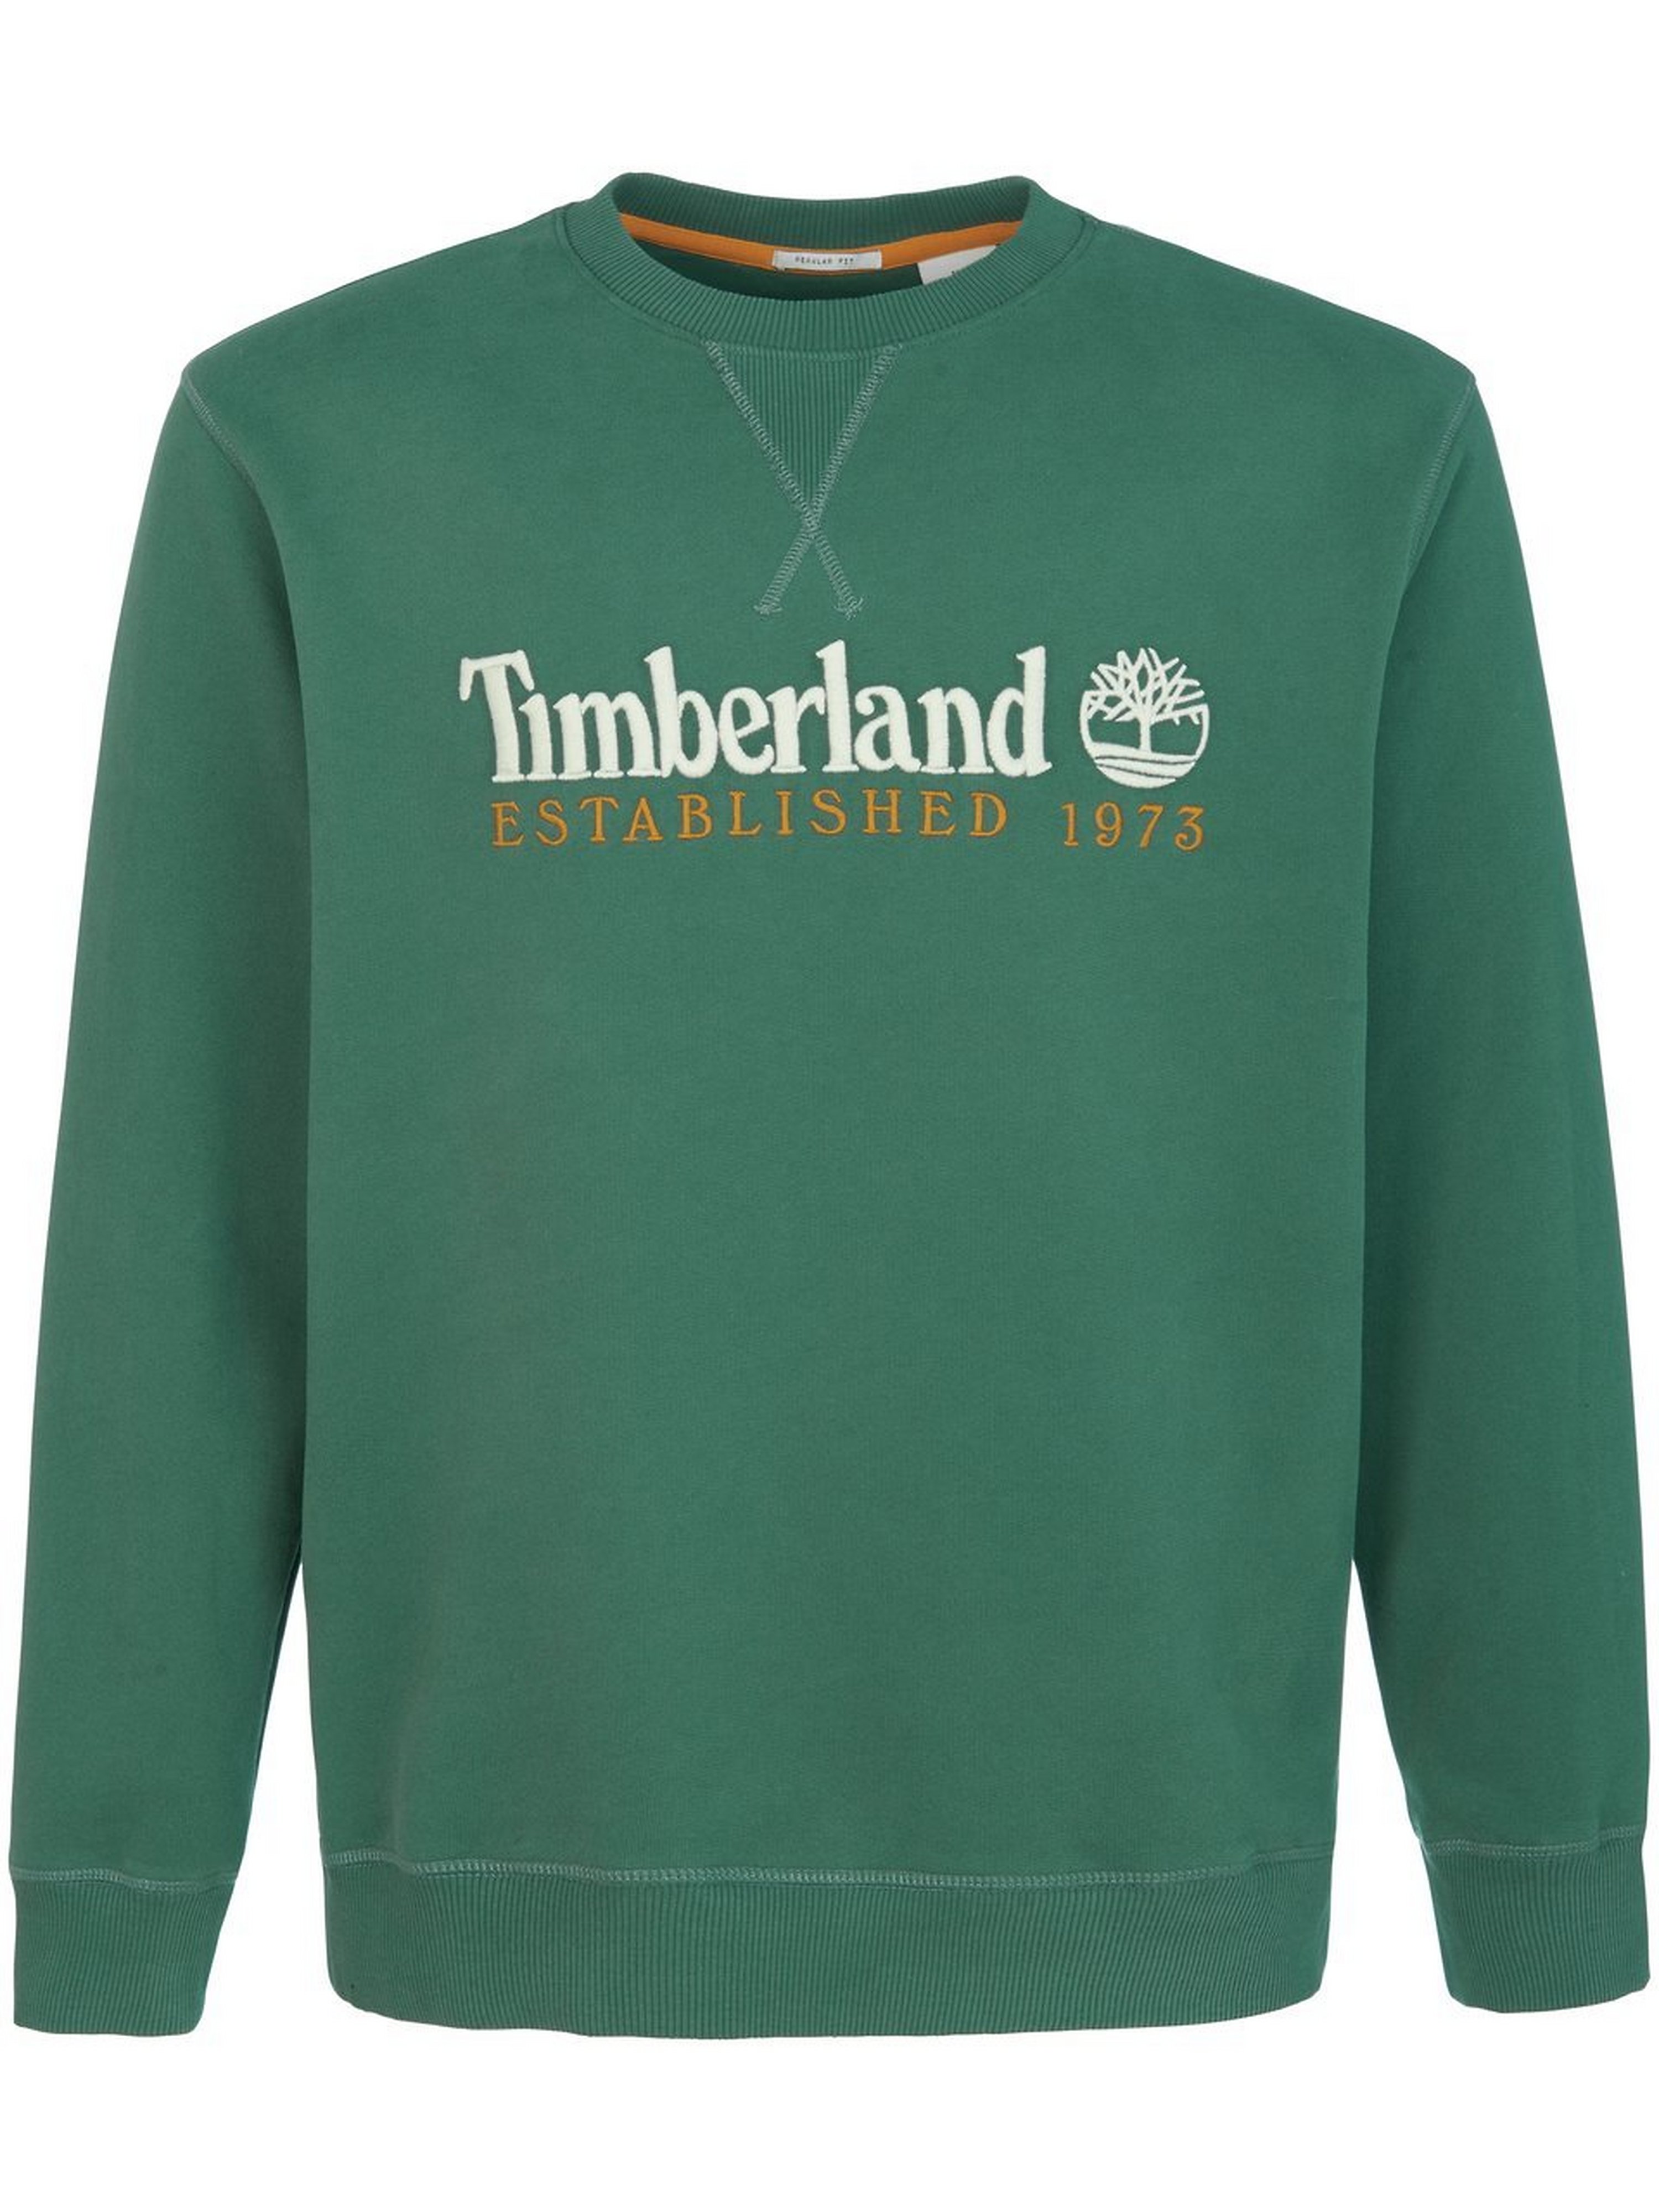 Sweatshirt Timberland grün Größe: 56